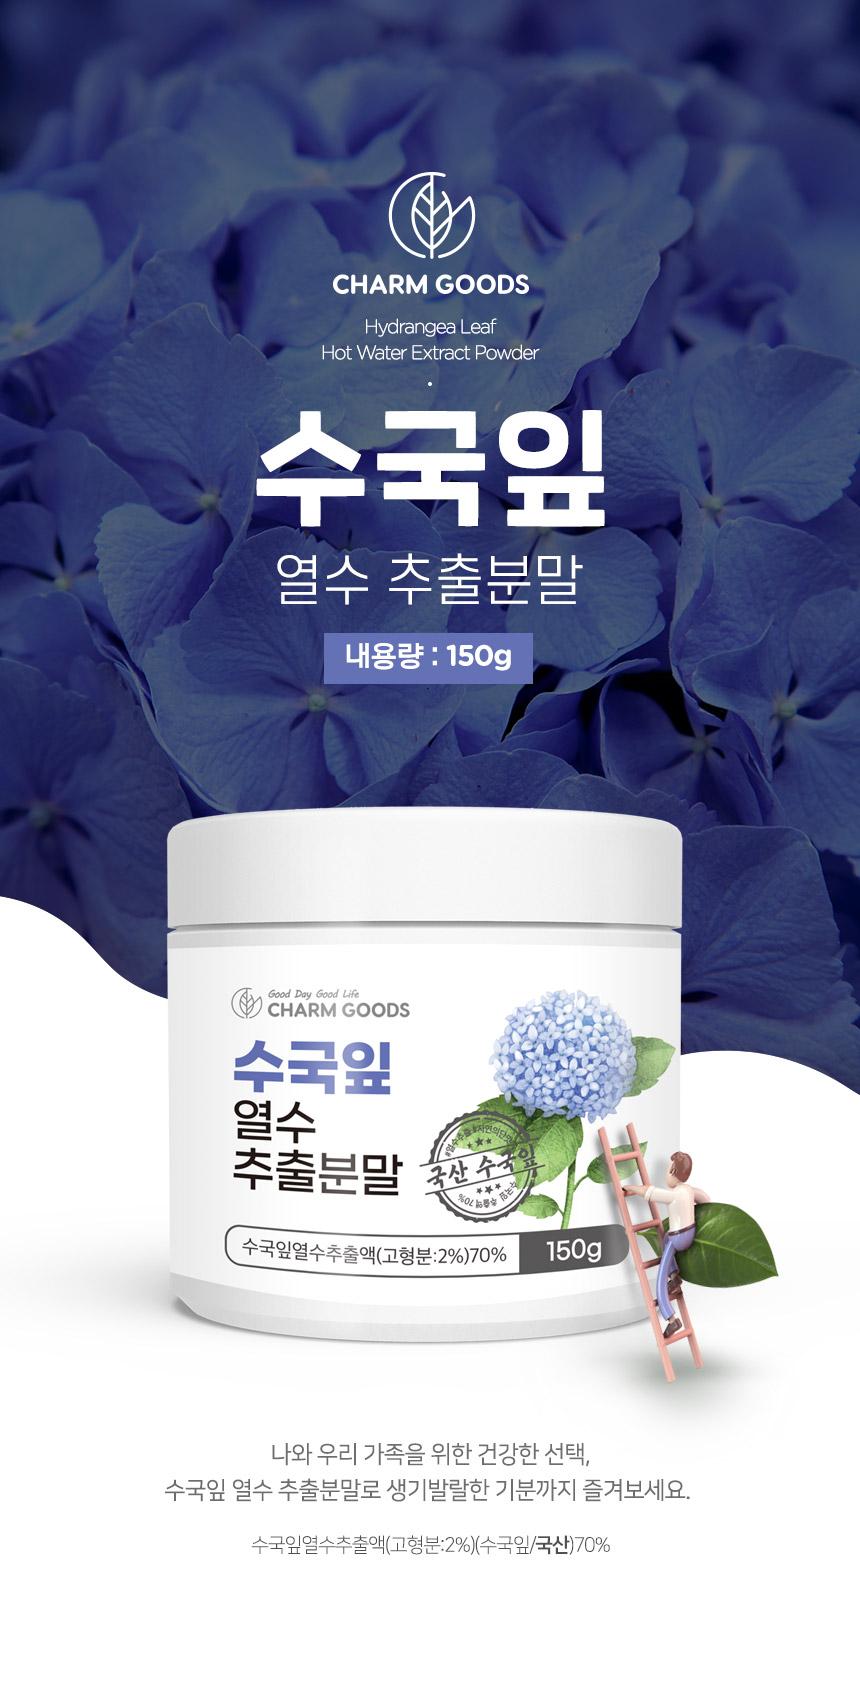 Charm Goods Hydrangea Leaf Hot Water Extract Powder 150g/Bottle Detailed Description